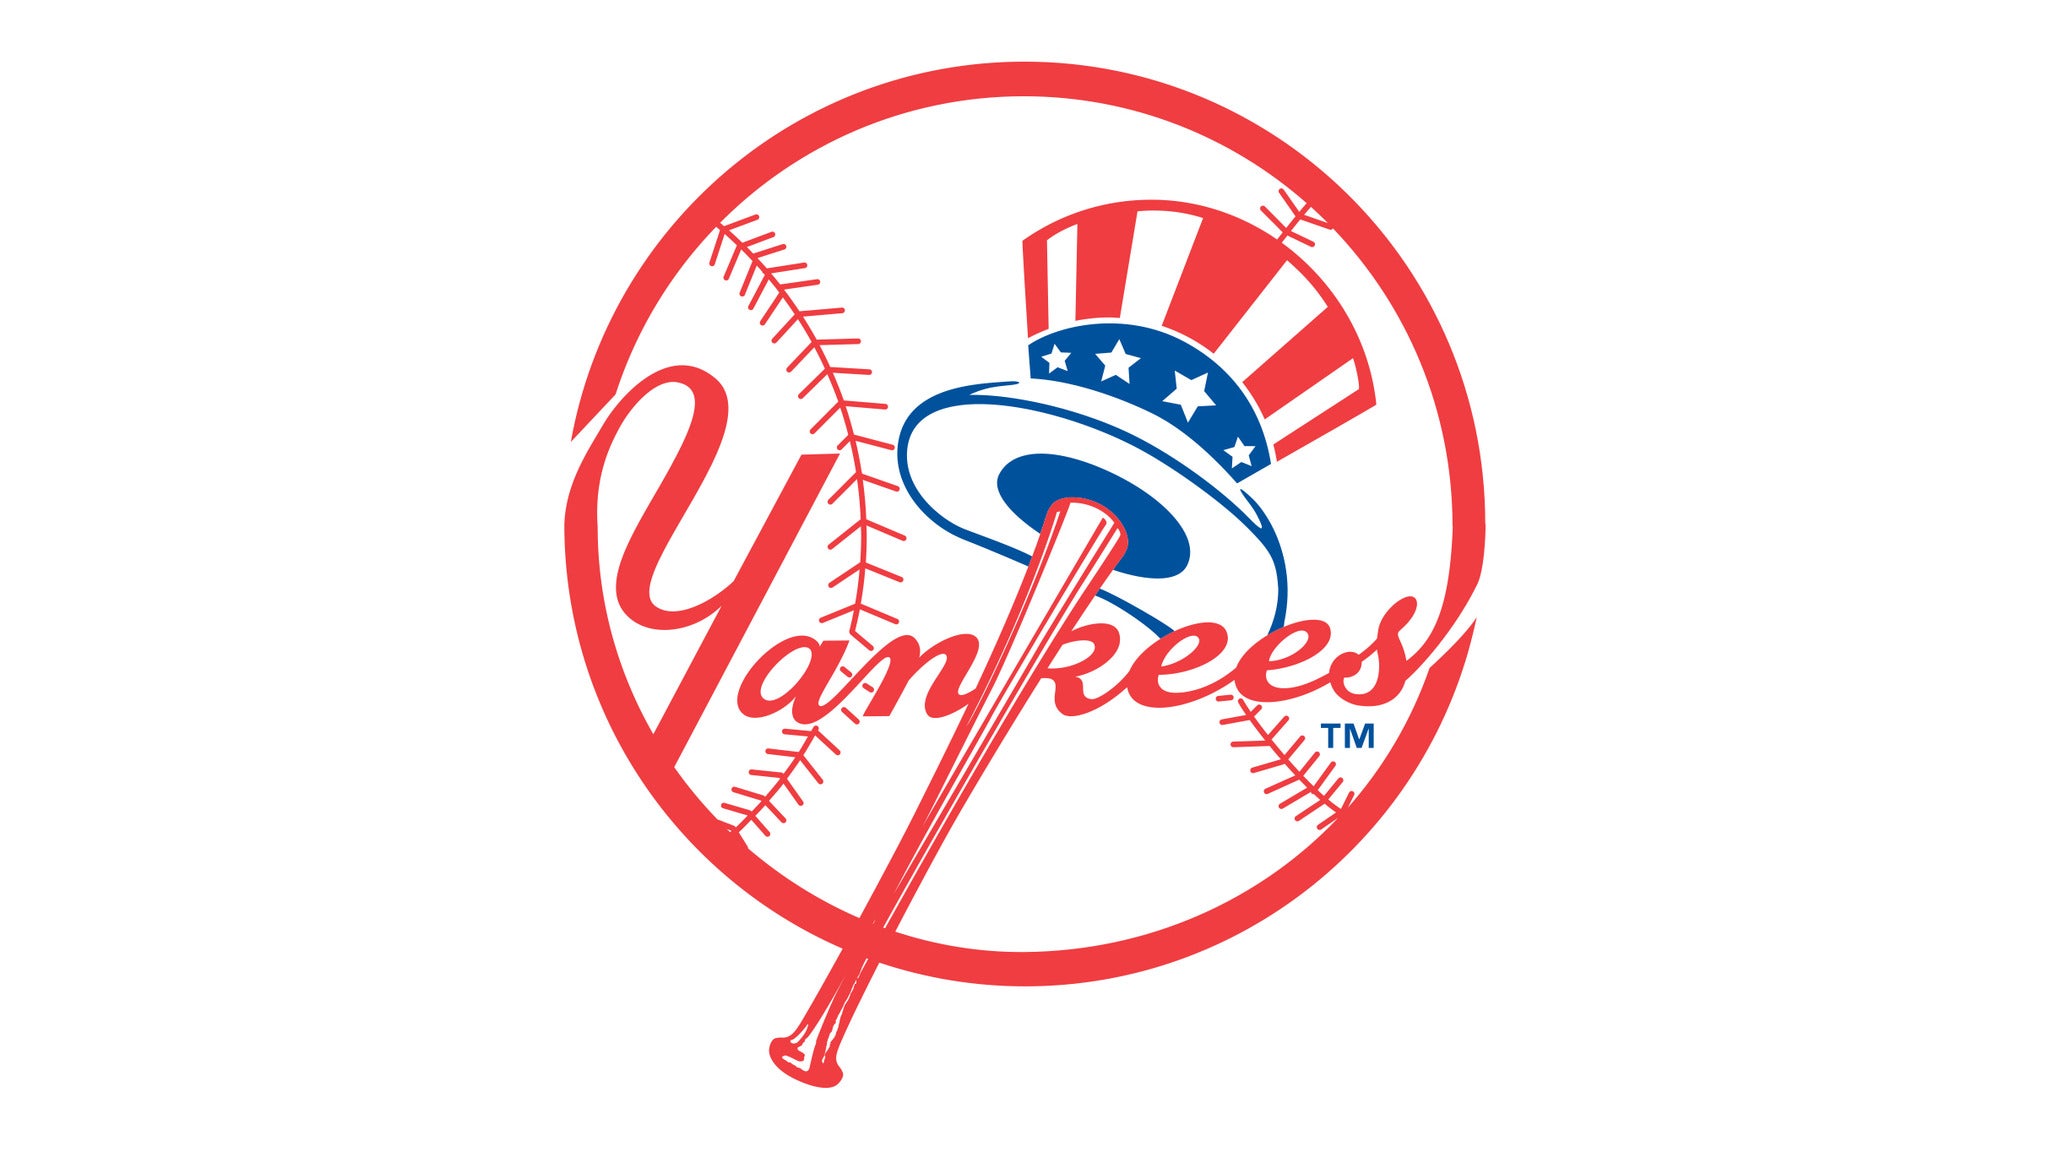 New York Yankees v. Oakland Athletics * Premium Seating